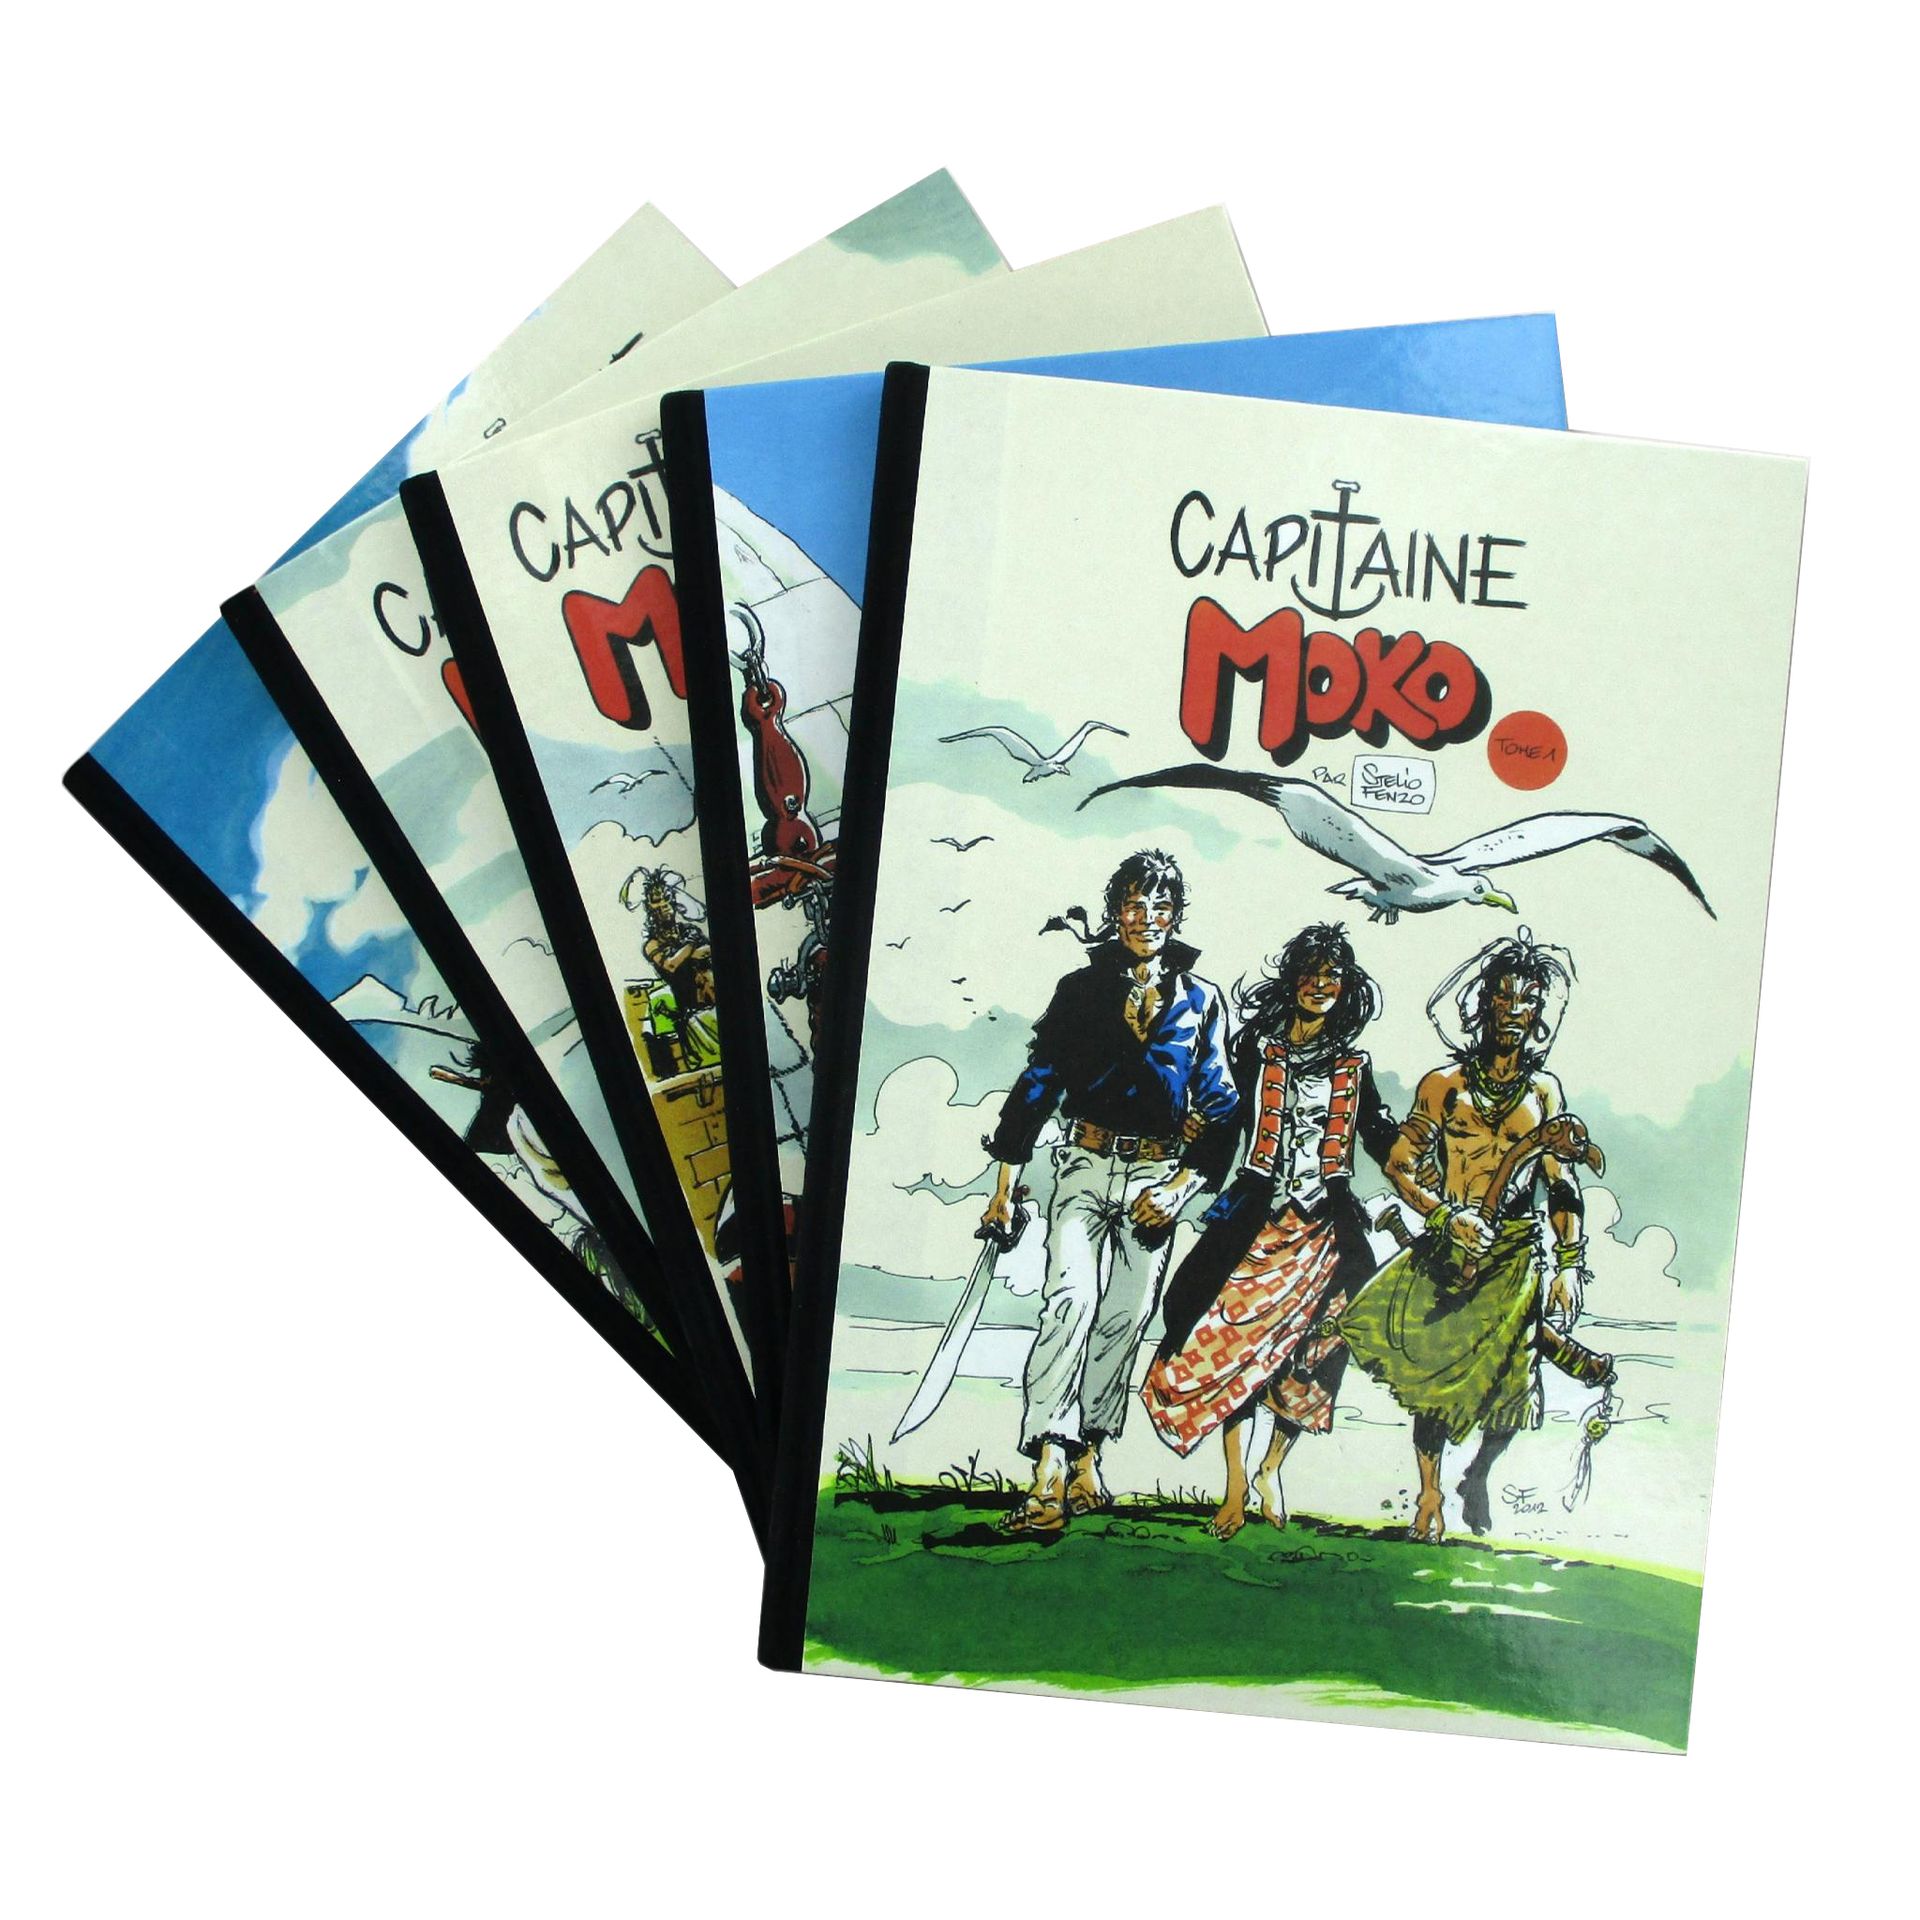 Null FENZO - Captain Moko
Complete 5-volume series corresponding to the Complete&hellip;